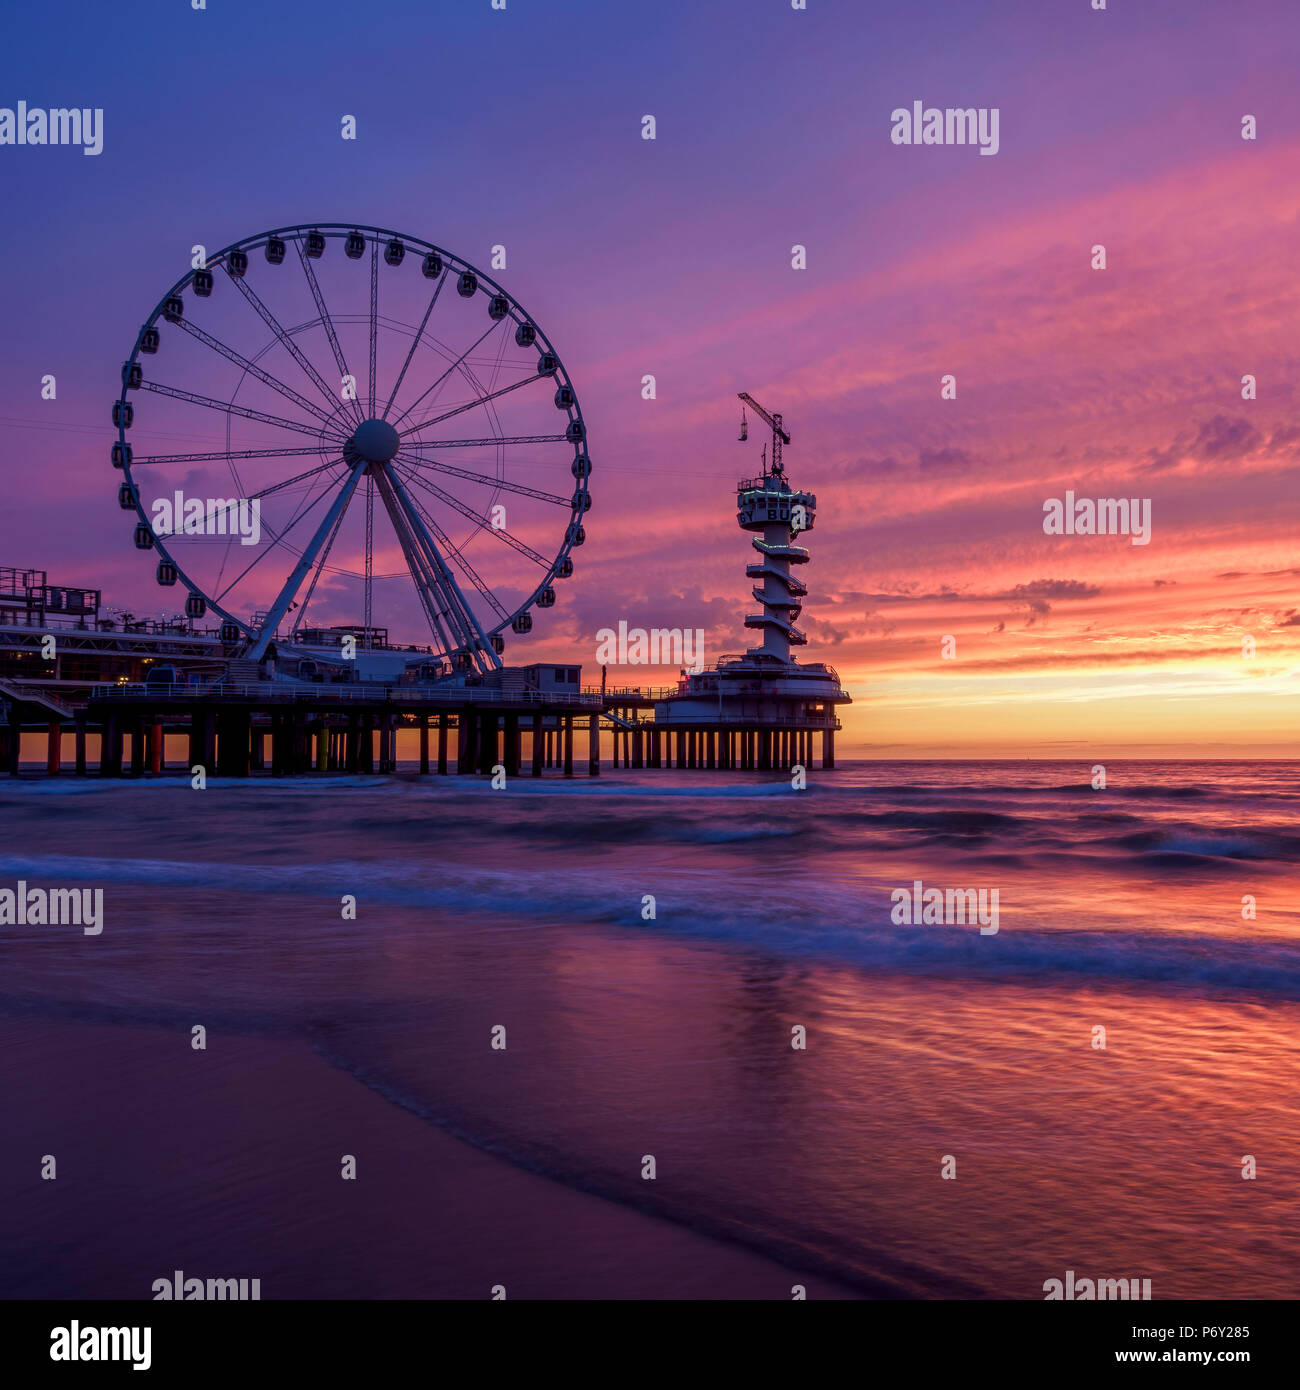 Pier and Ferris Wheel in Scheveningen, sunset, The Hague, South Holland, The Netherlands Stock Photo